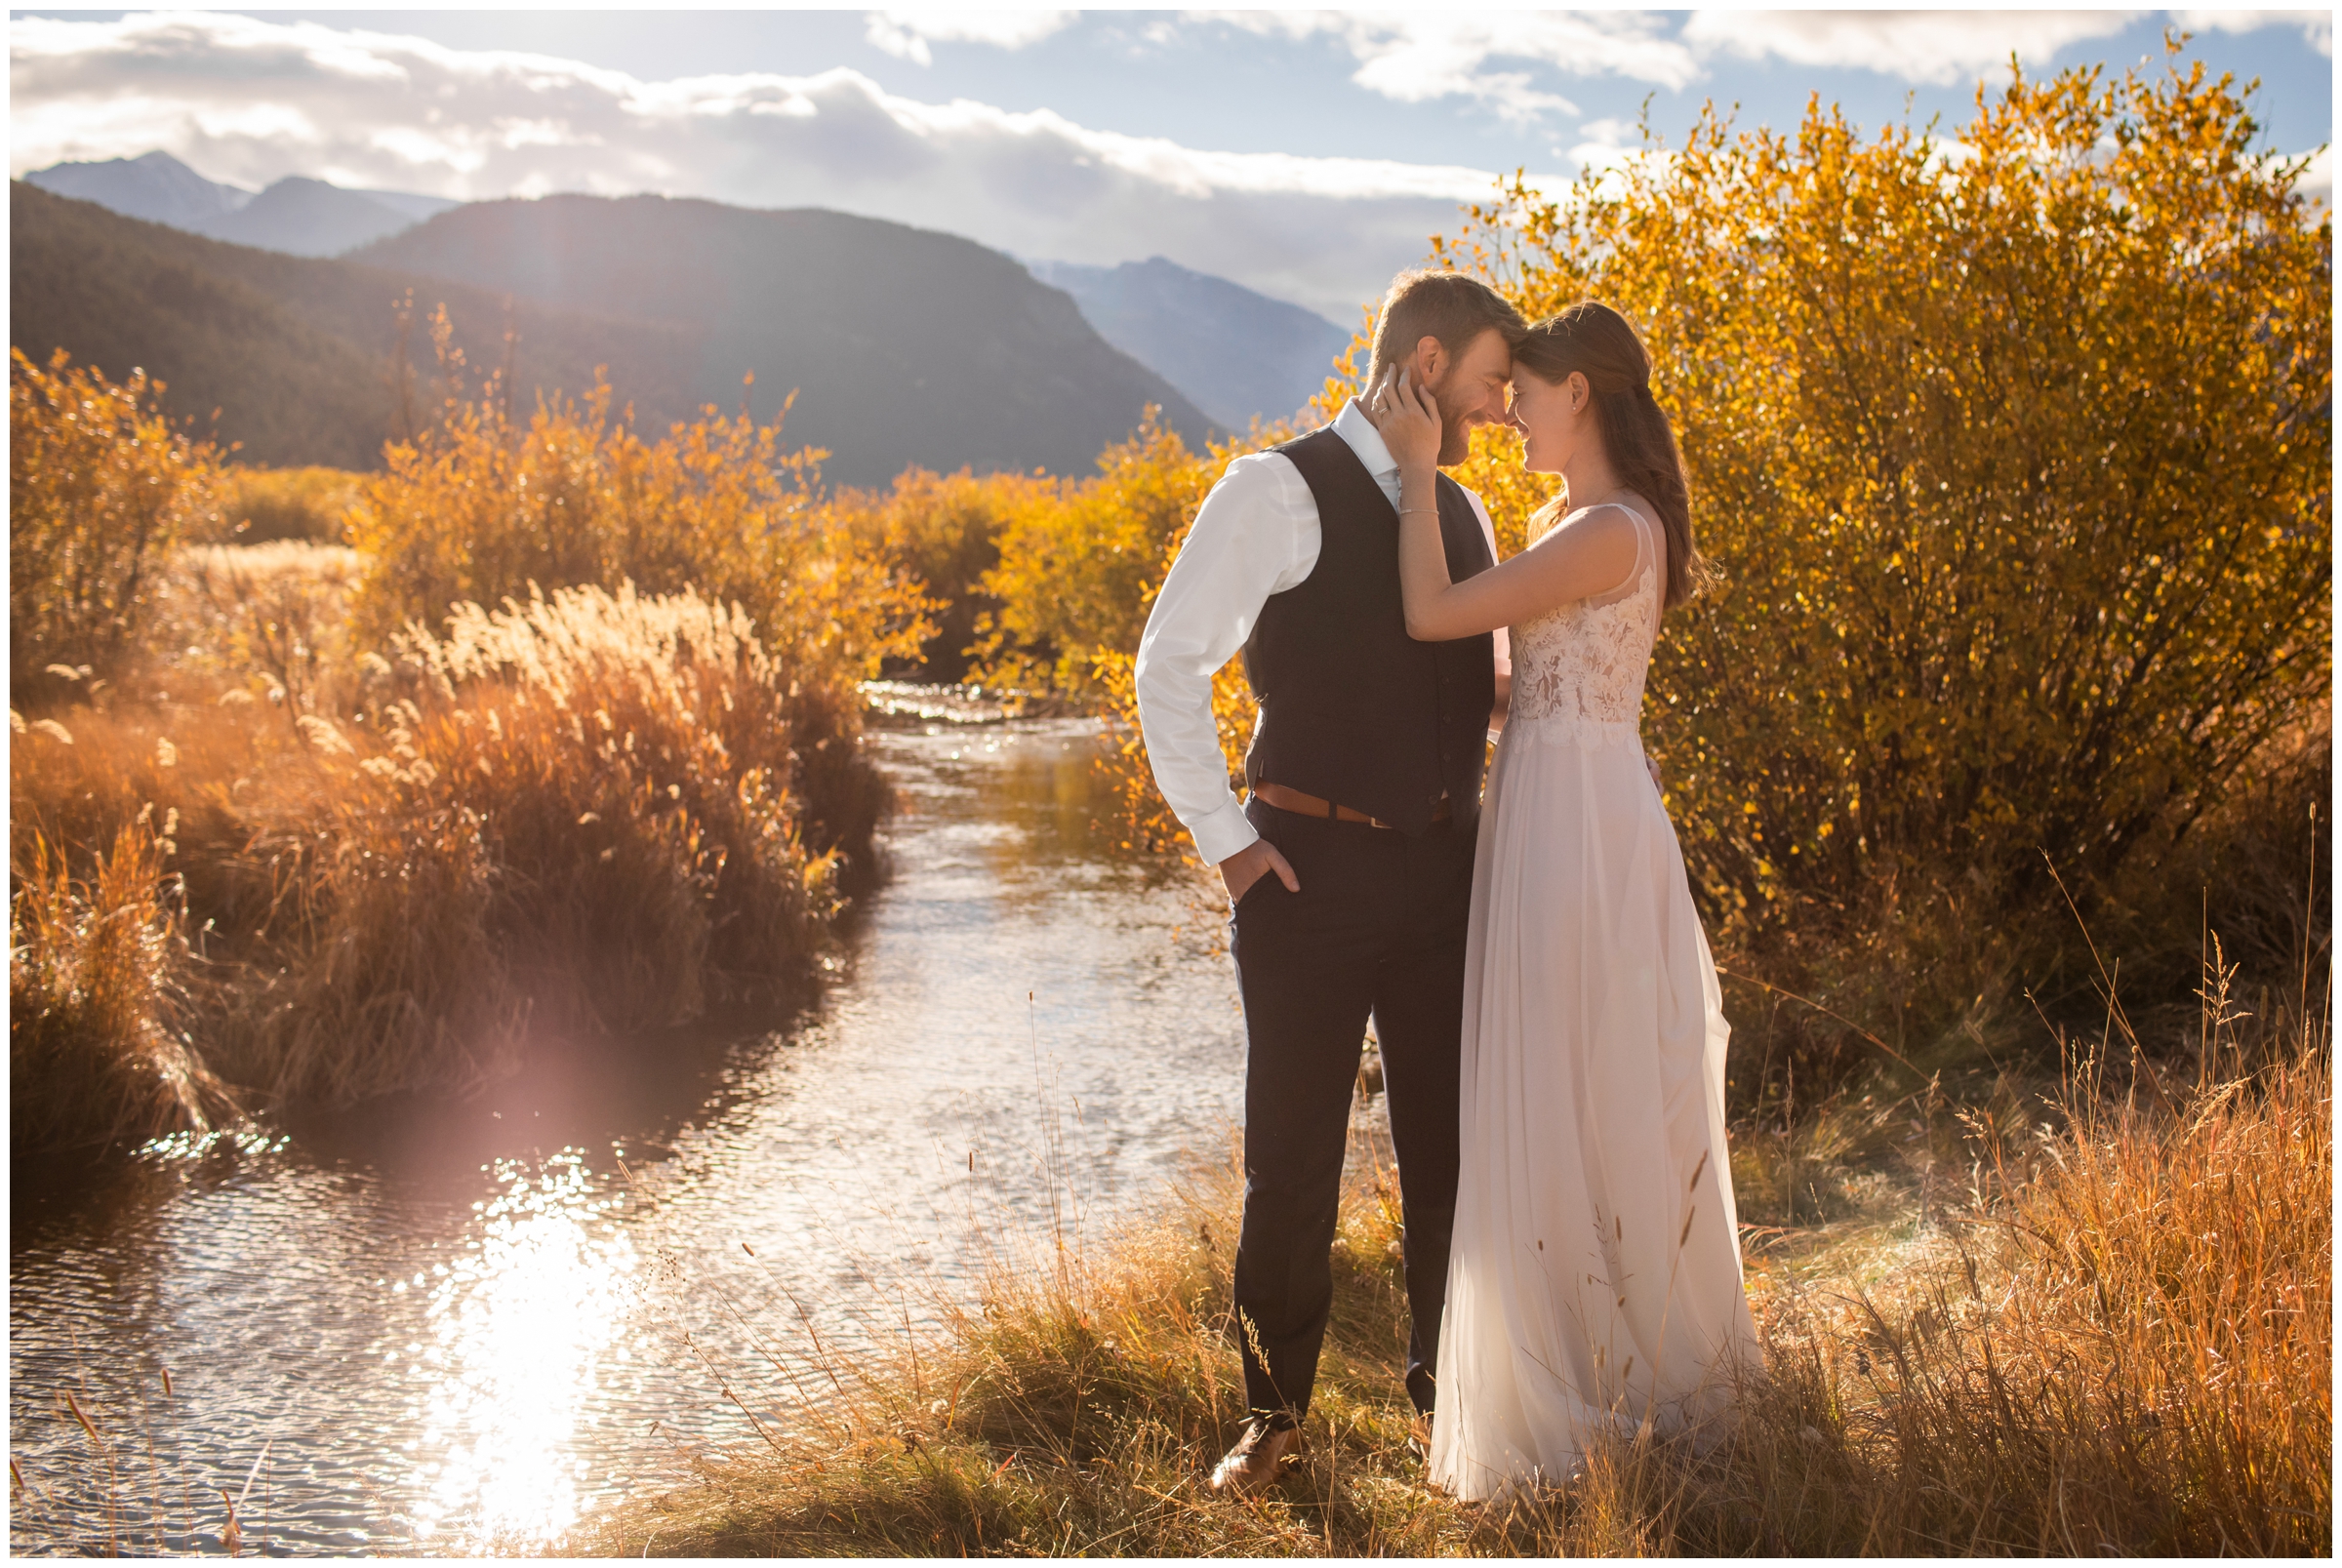 Colorado elopement inspiration by the river at Moraine Park in estes Park 